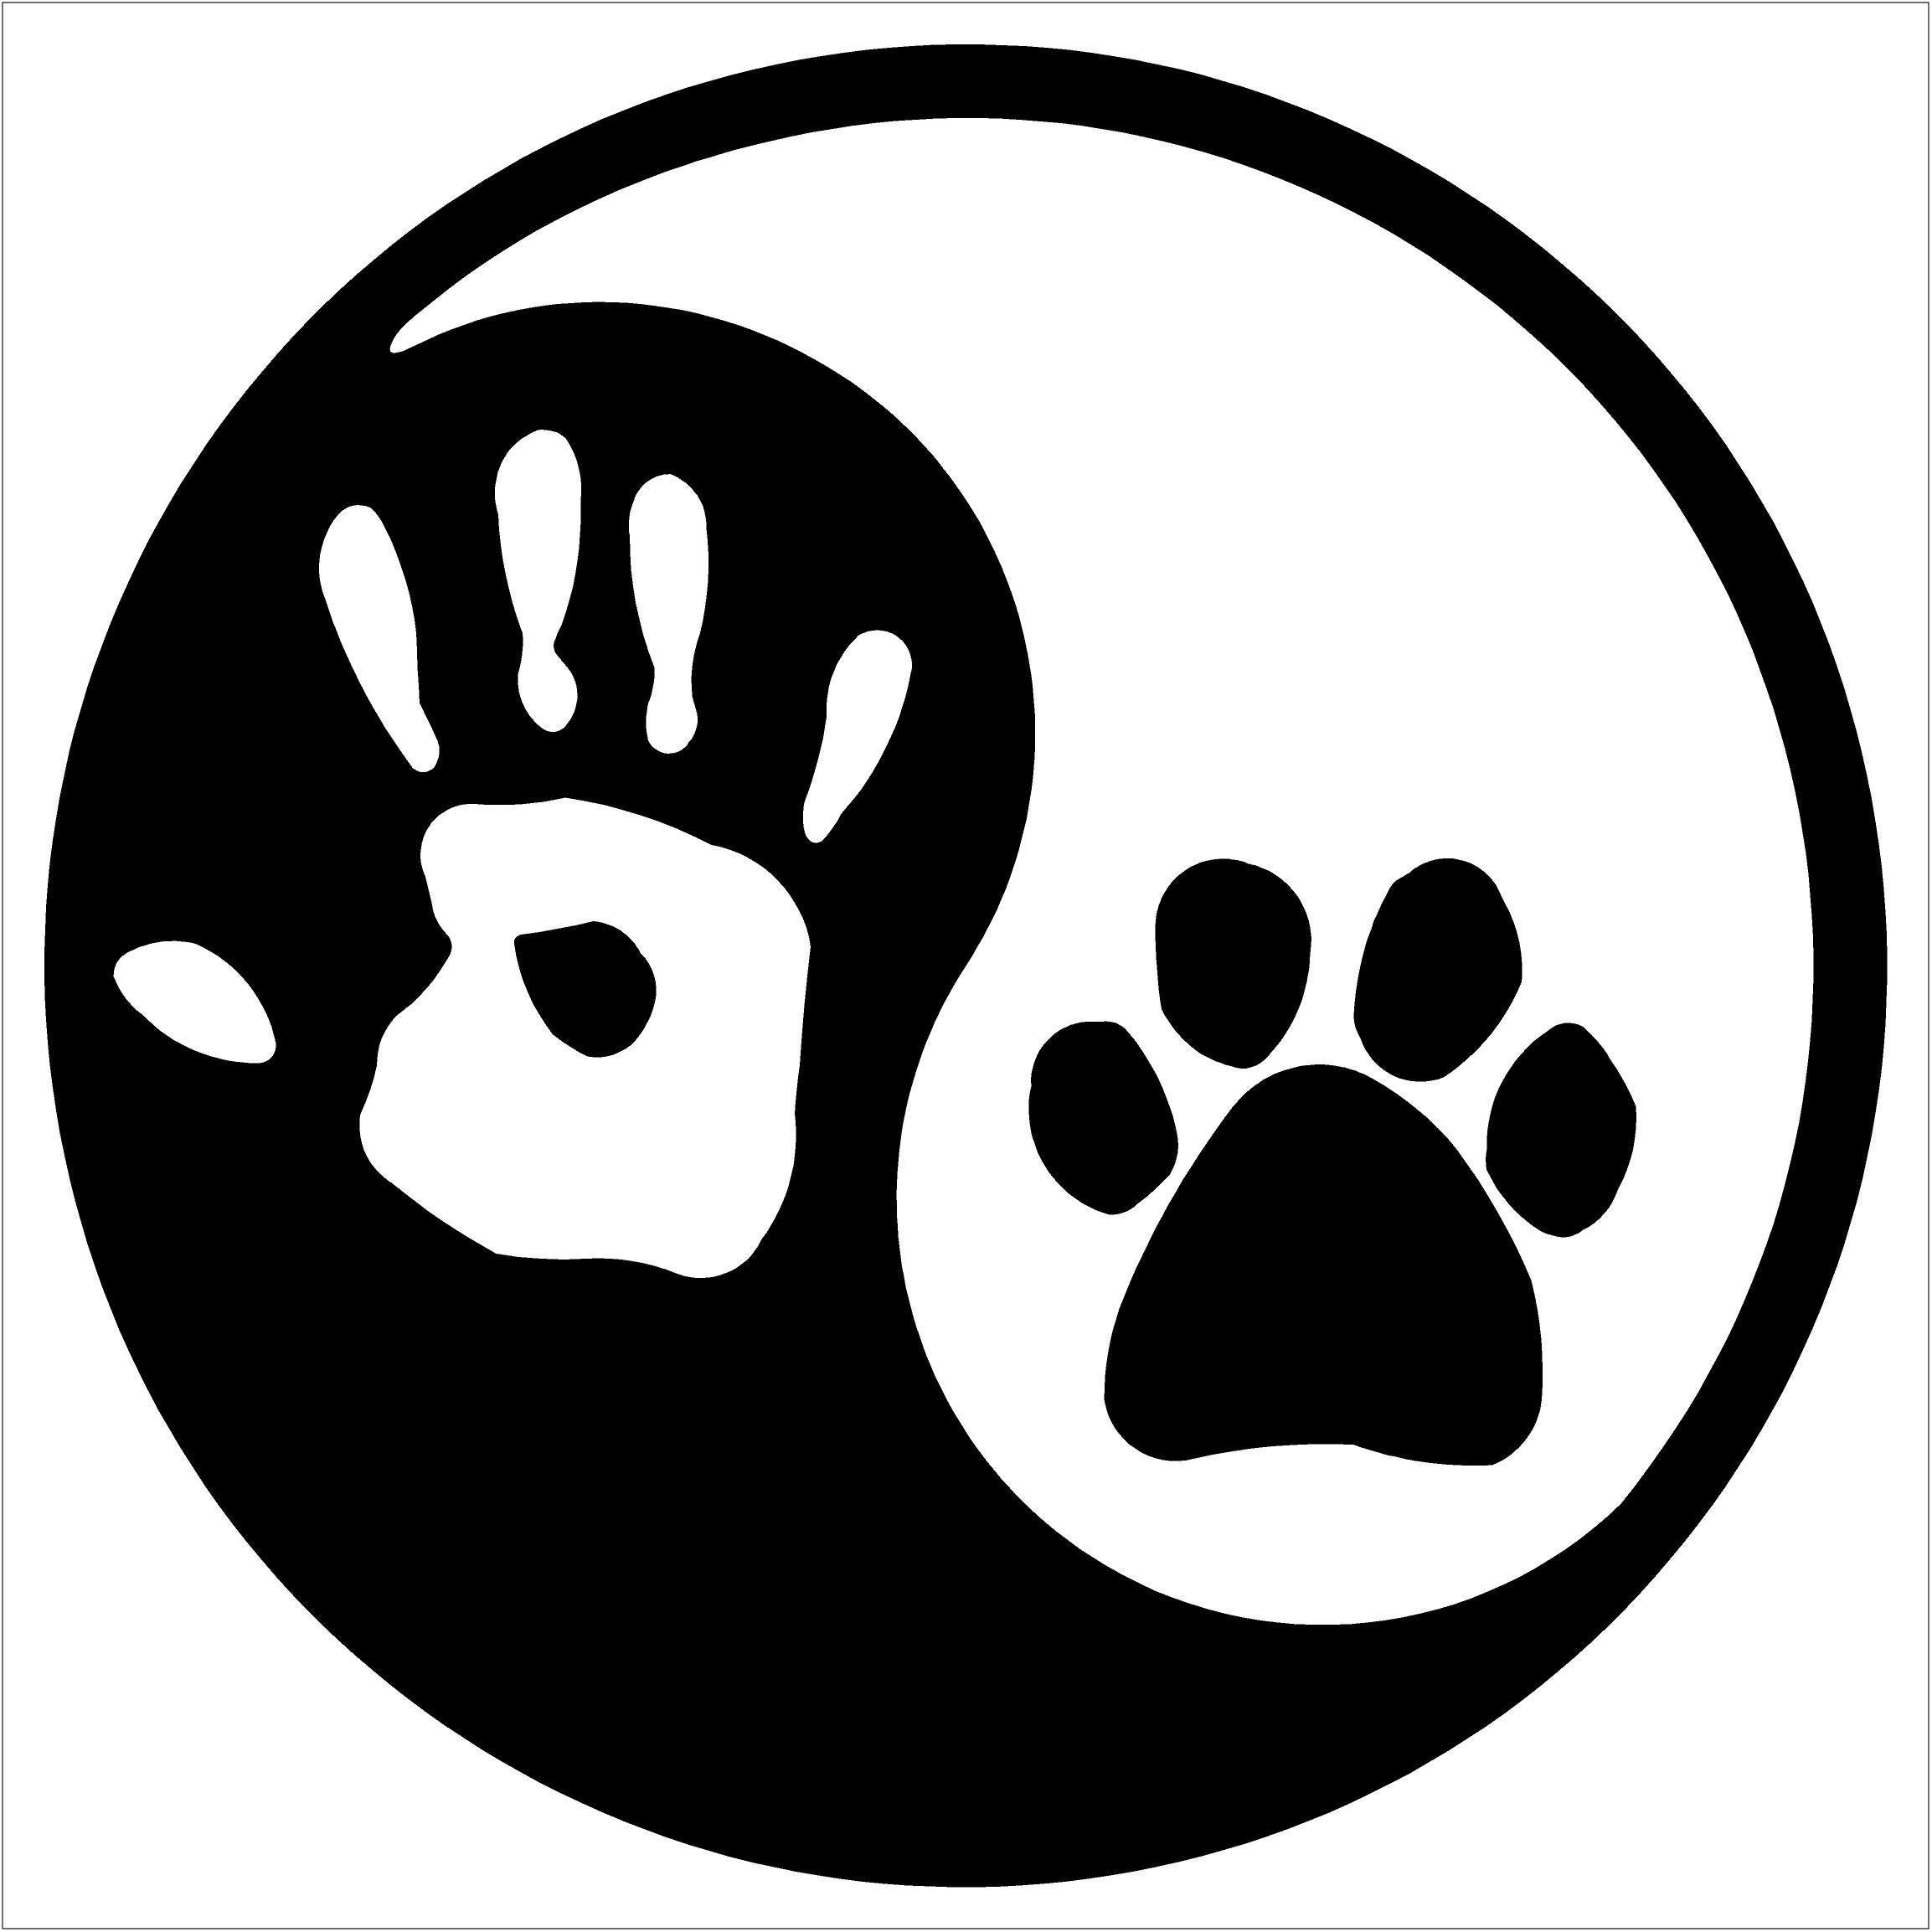 Метка для животных. Знак защиты животных. Значок лапы. День защиты животных символ. Логотип лапа.